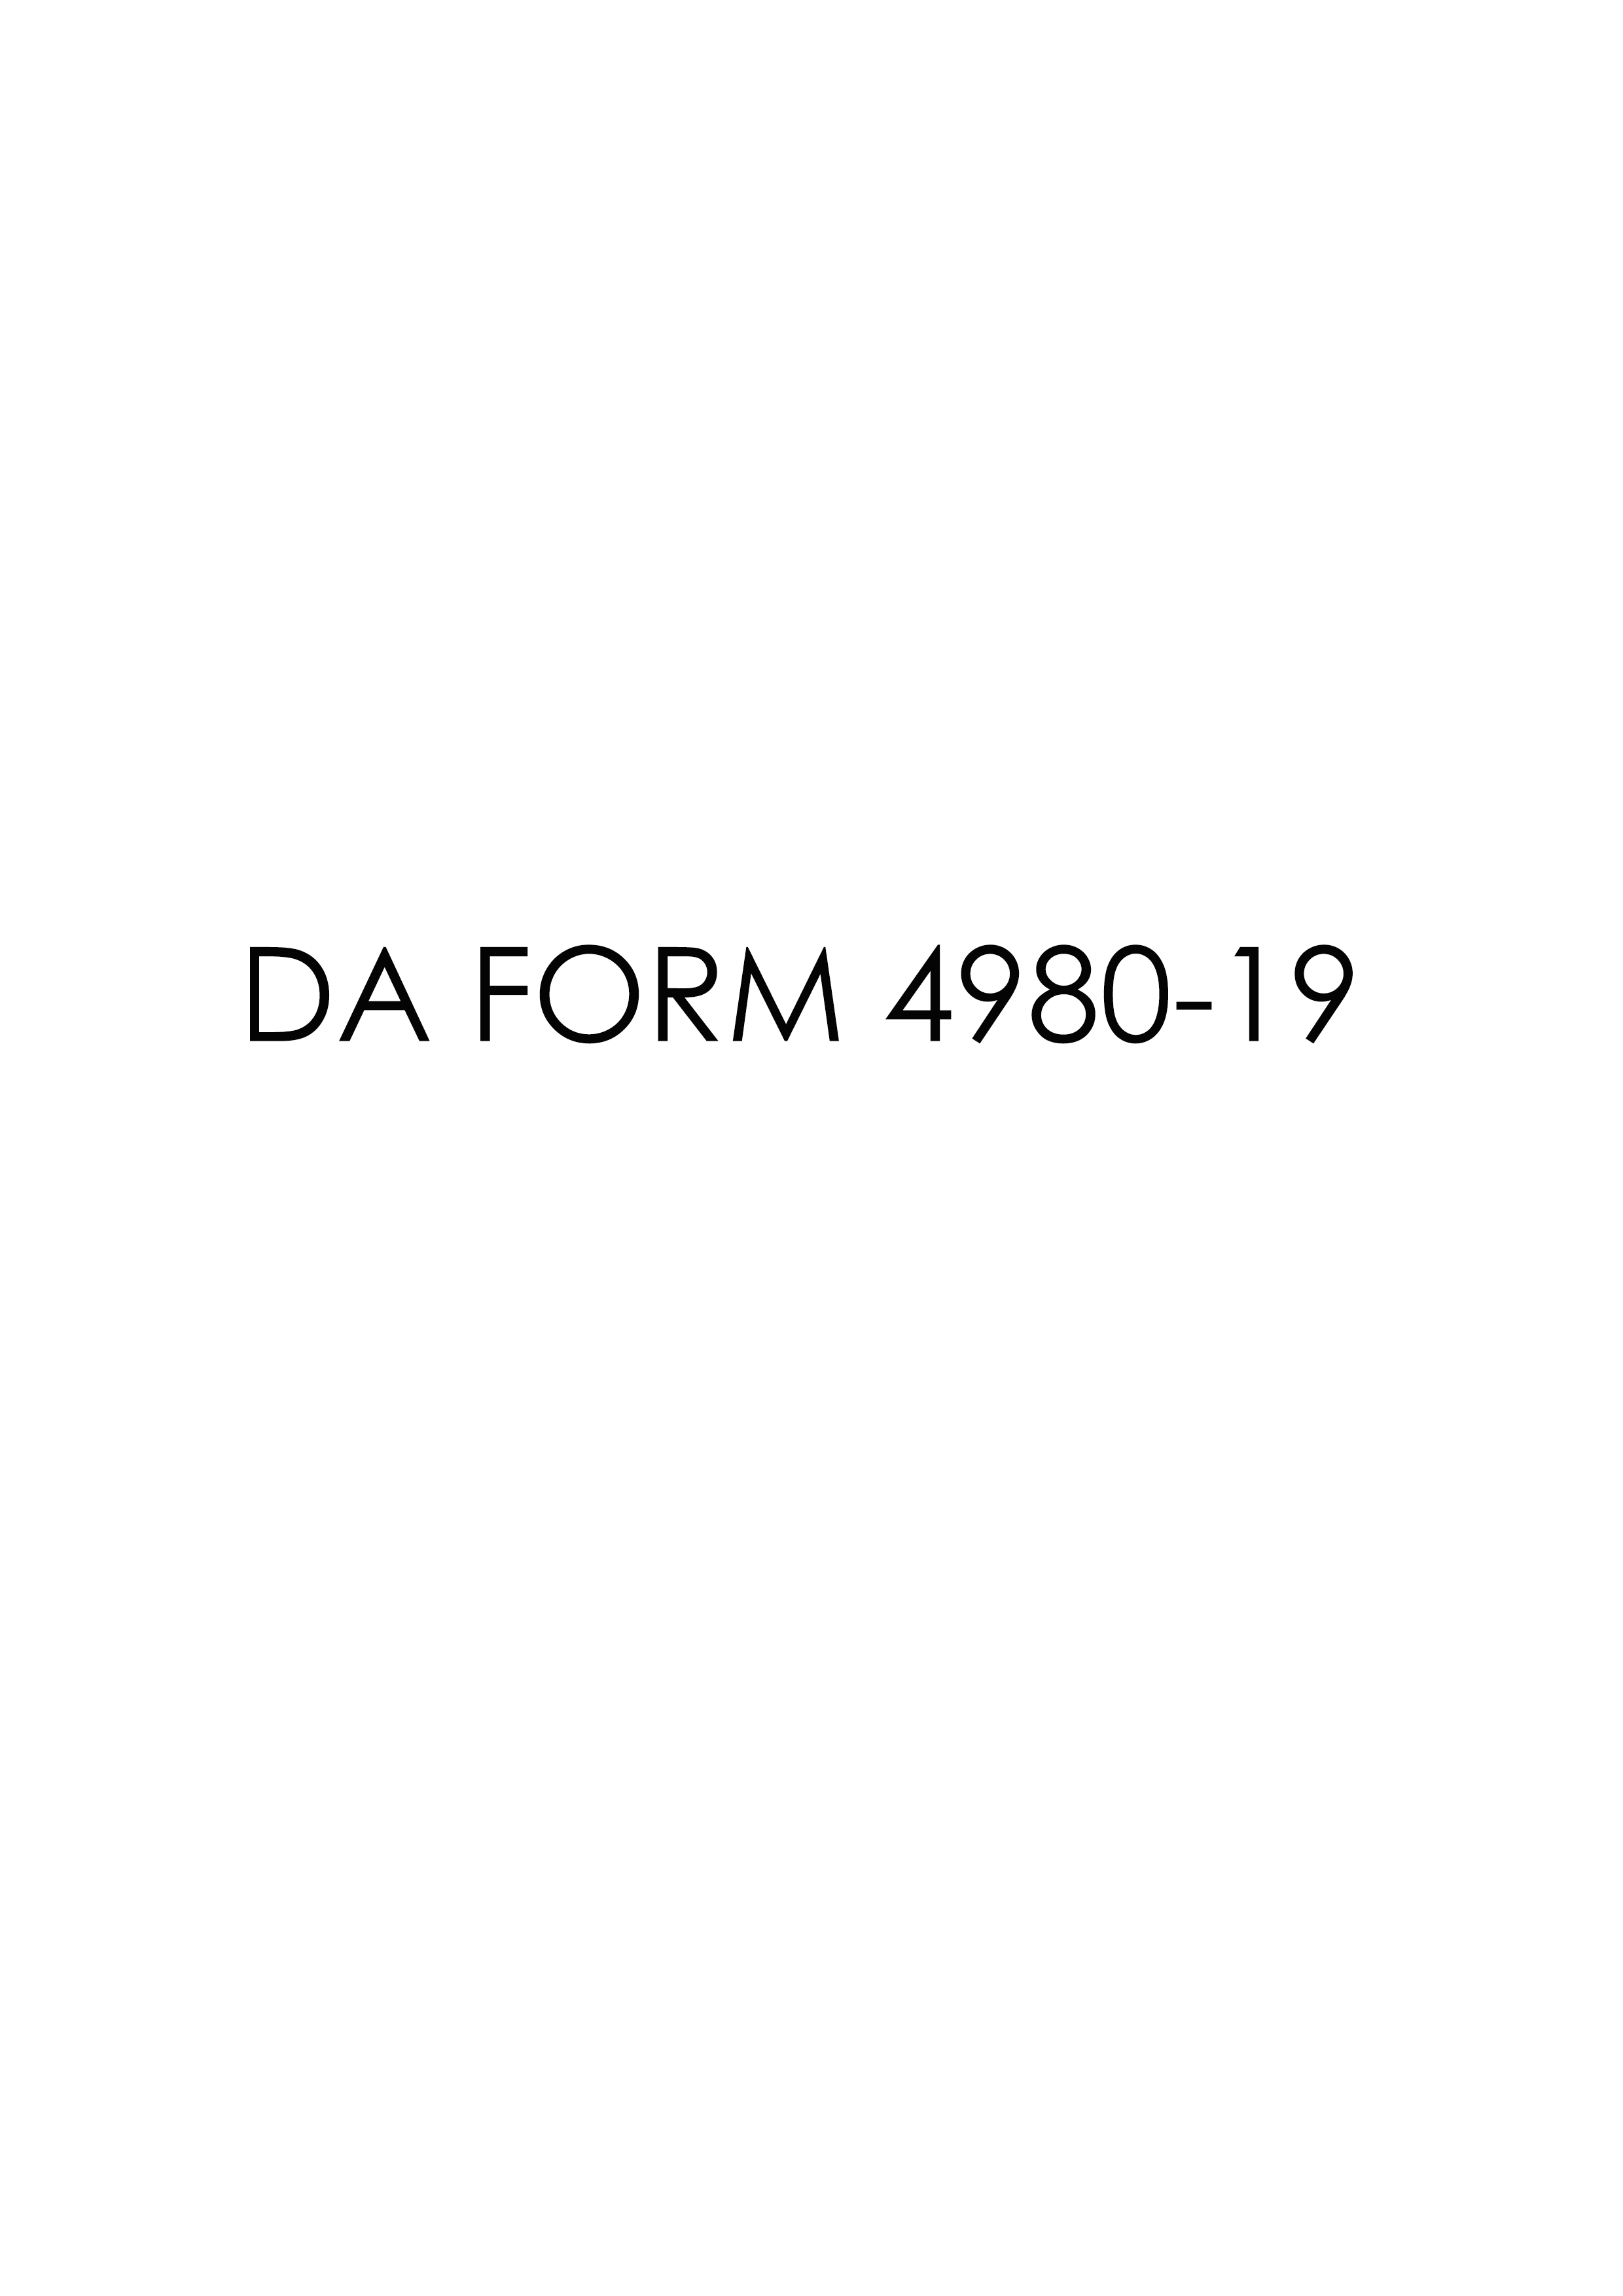 Download Fillable da Form 4980-19